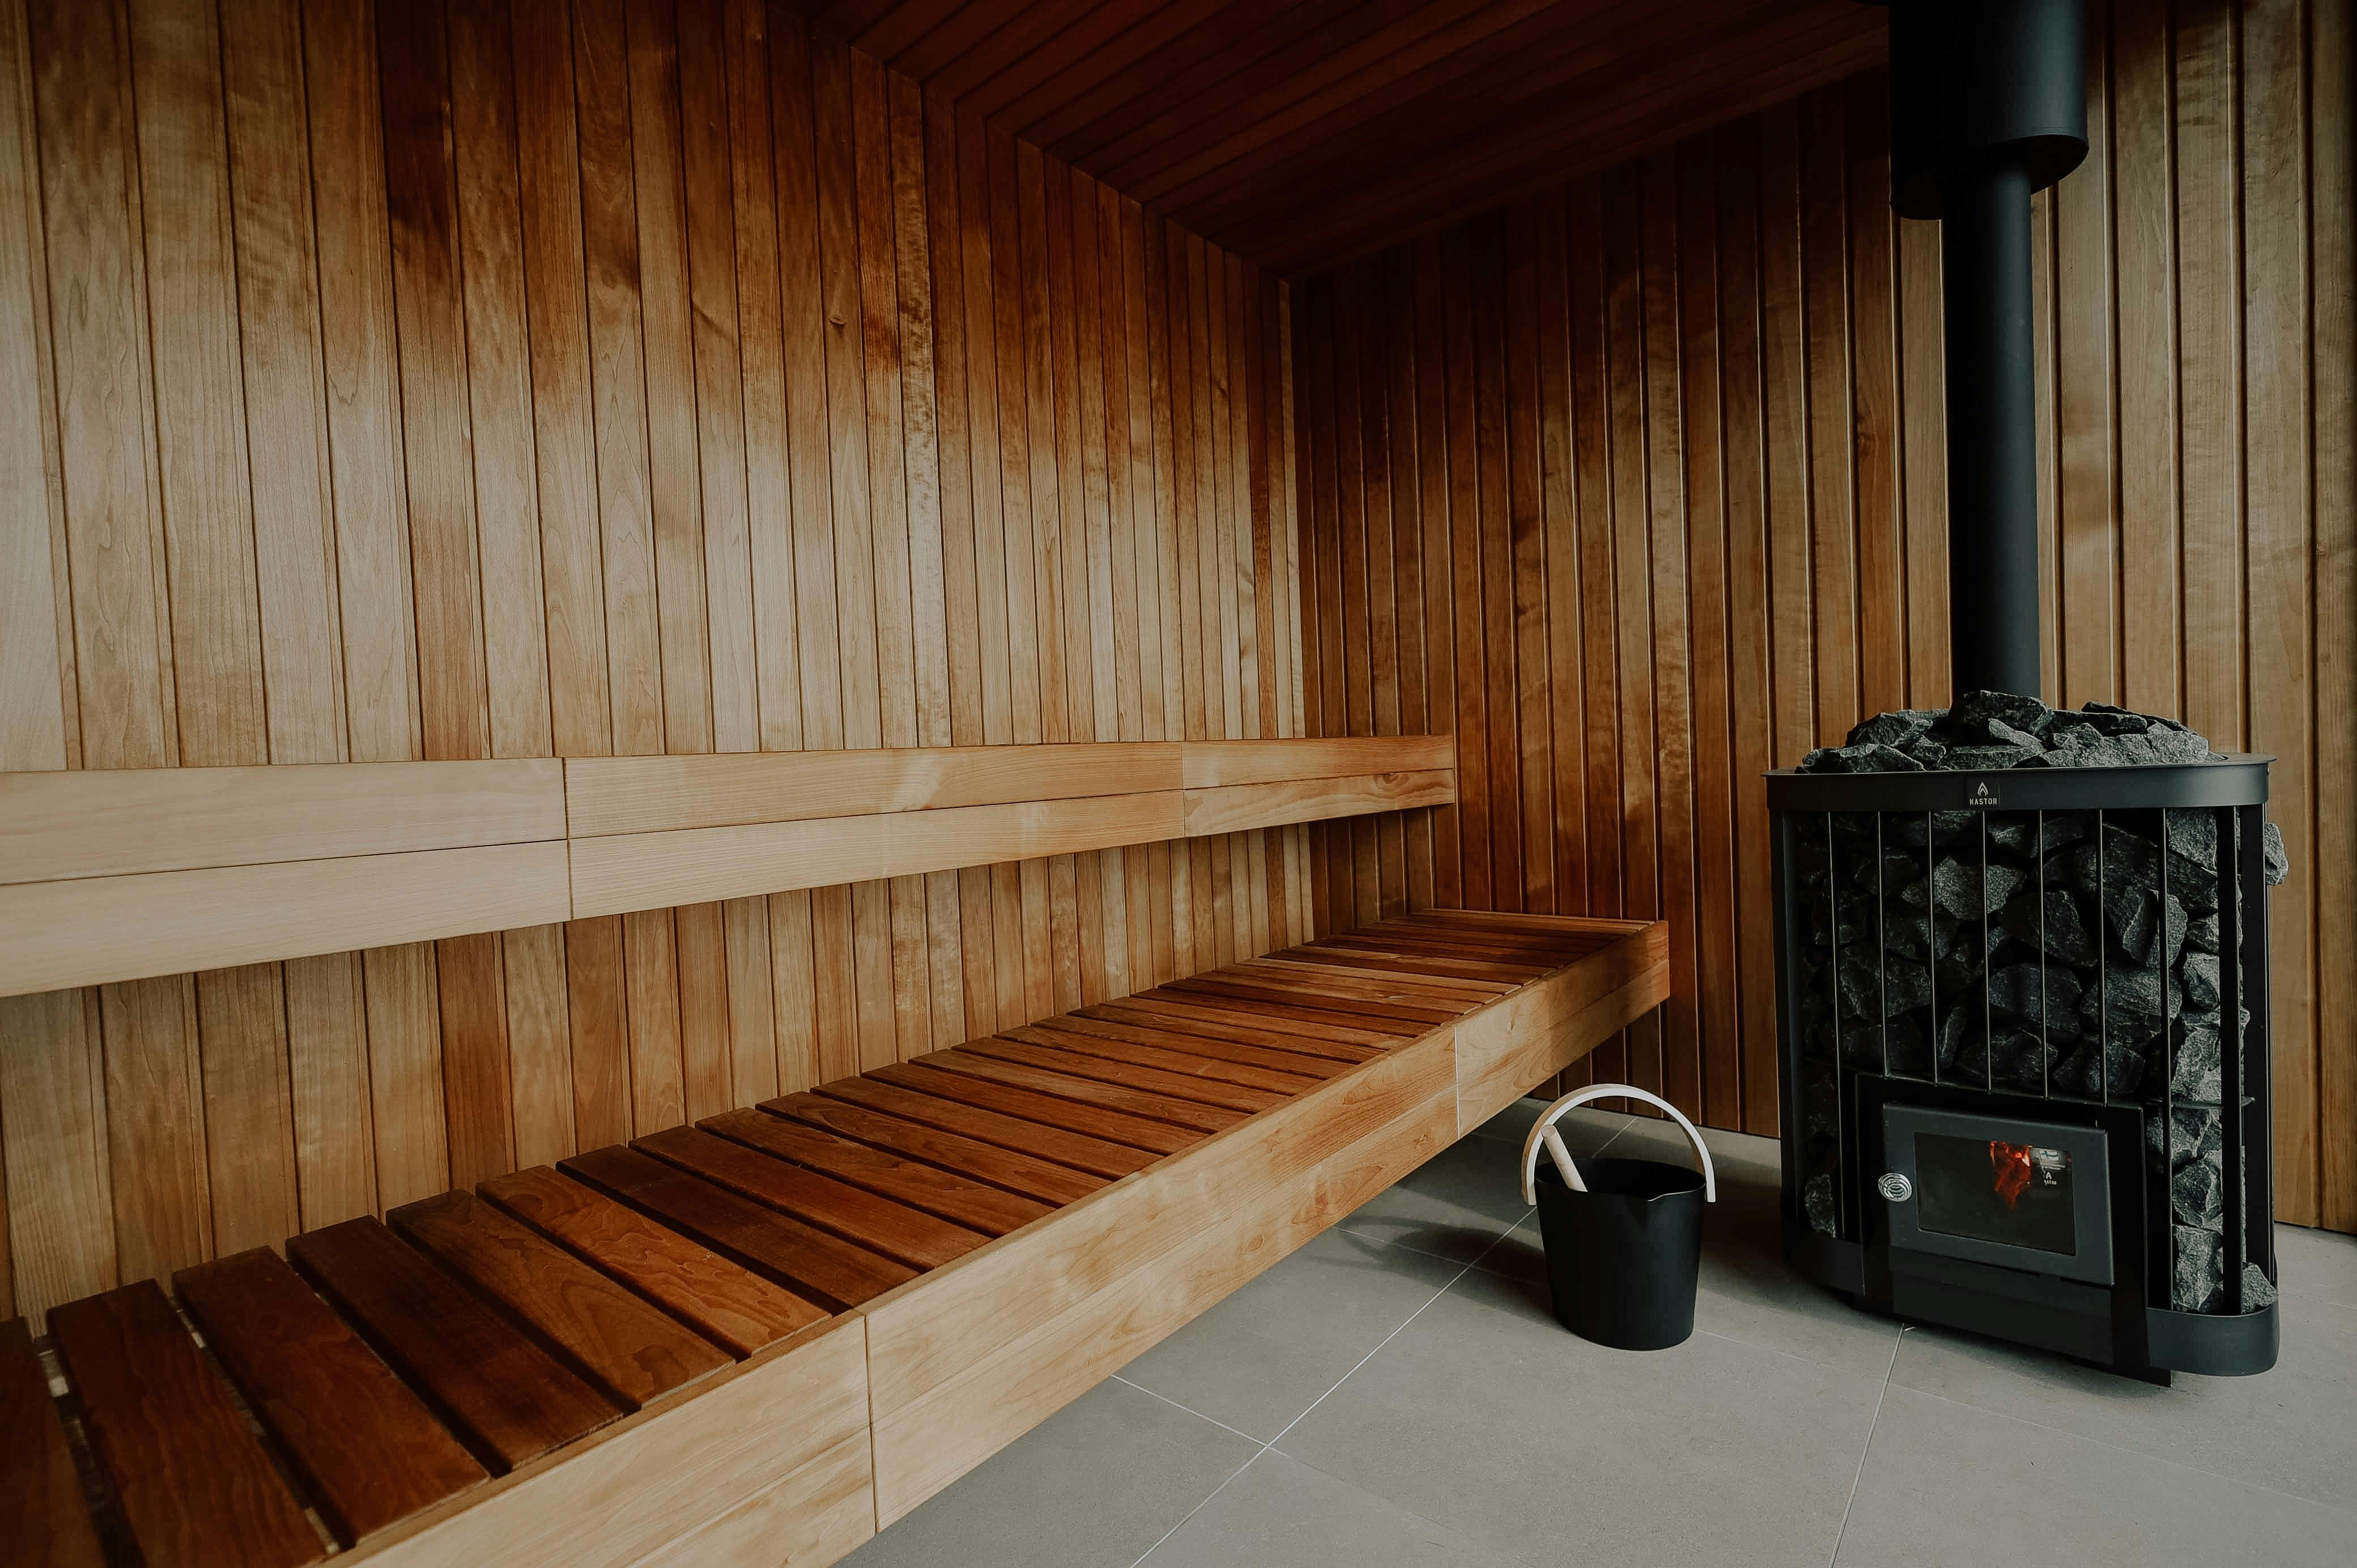 The Sauna Space